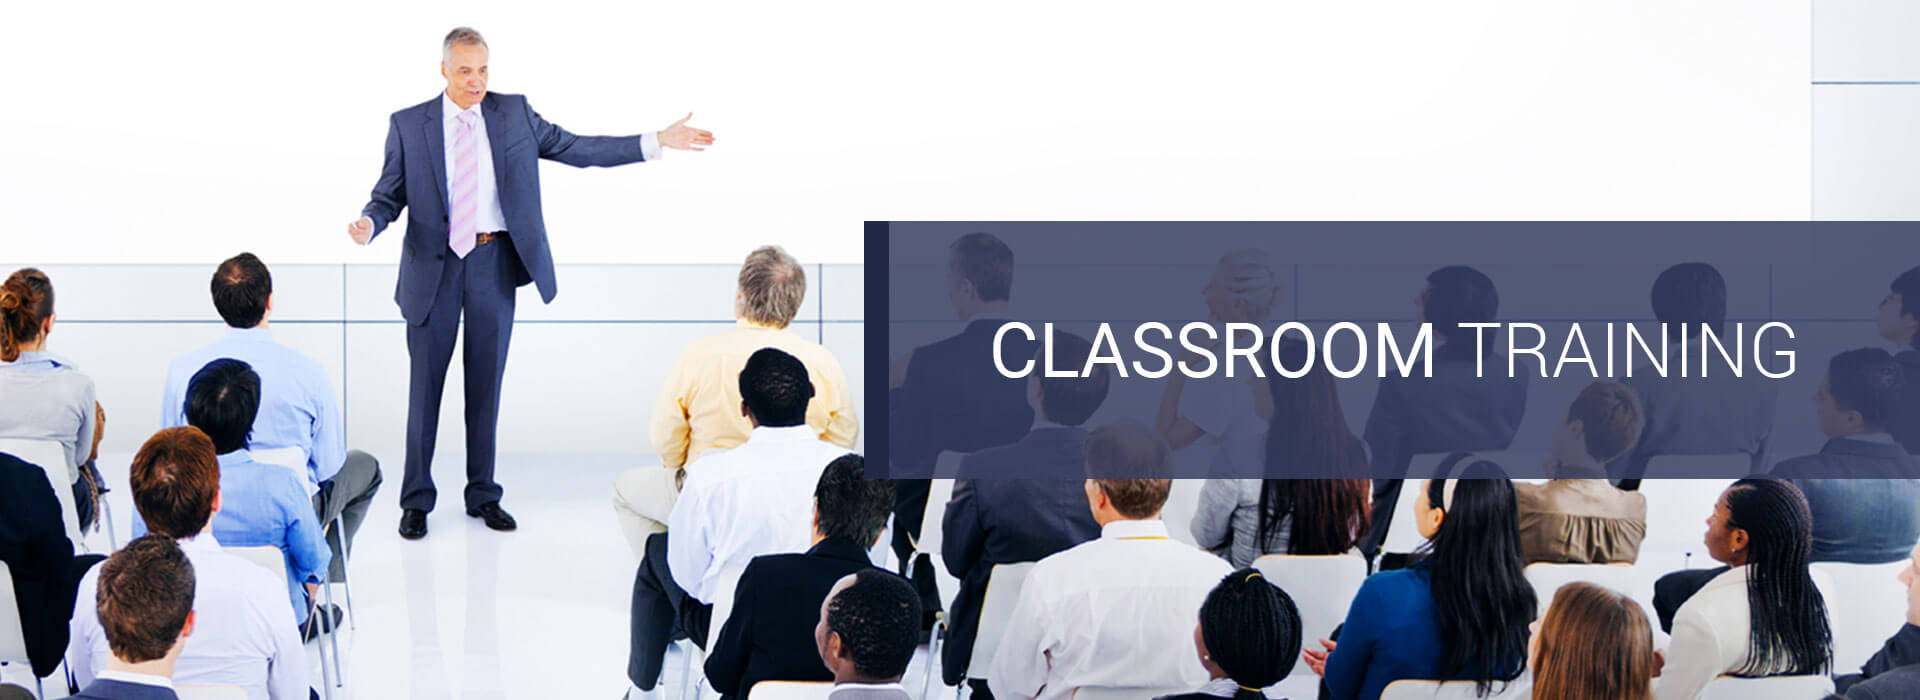 Classroom Training, Classroom Training in Noida, Classroom Training  Institute